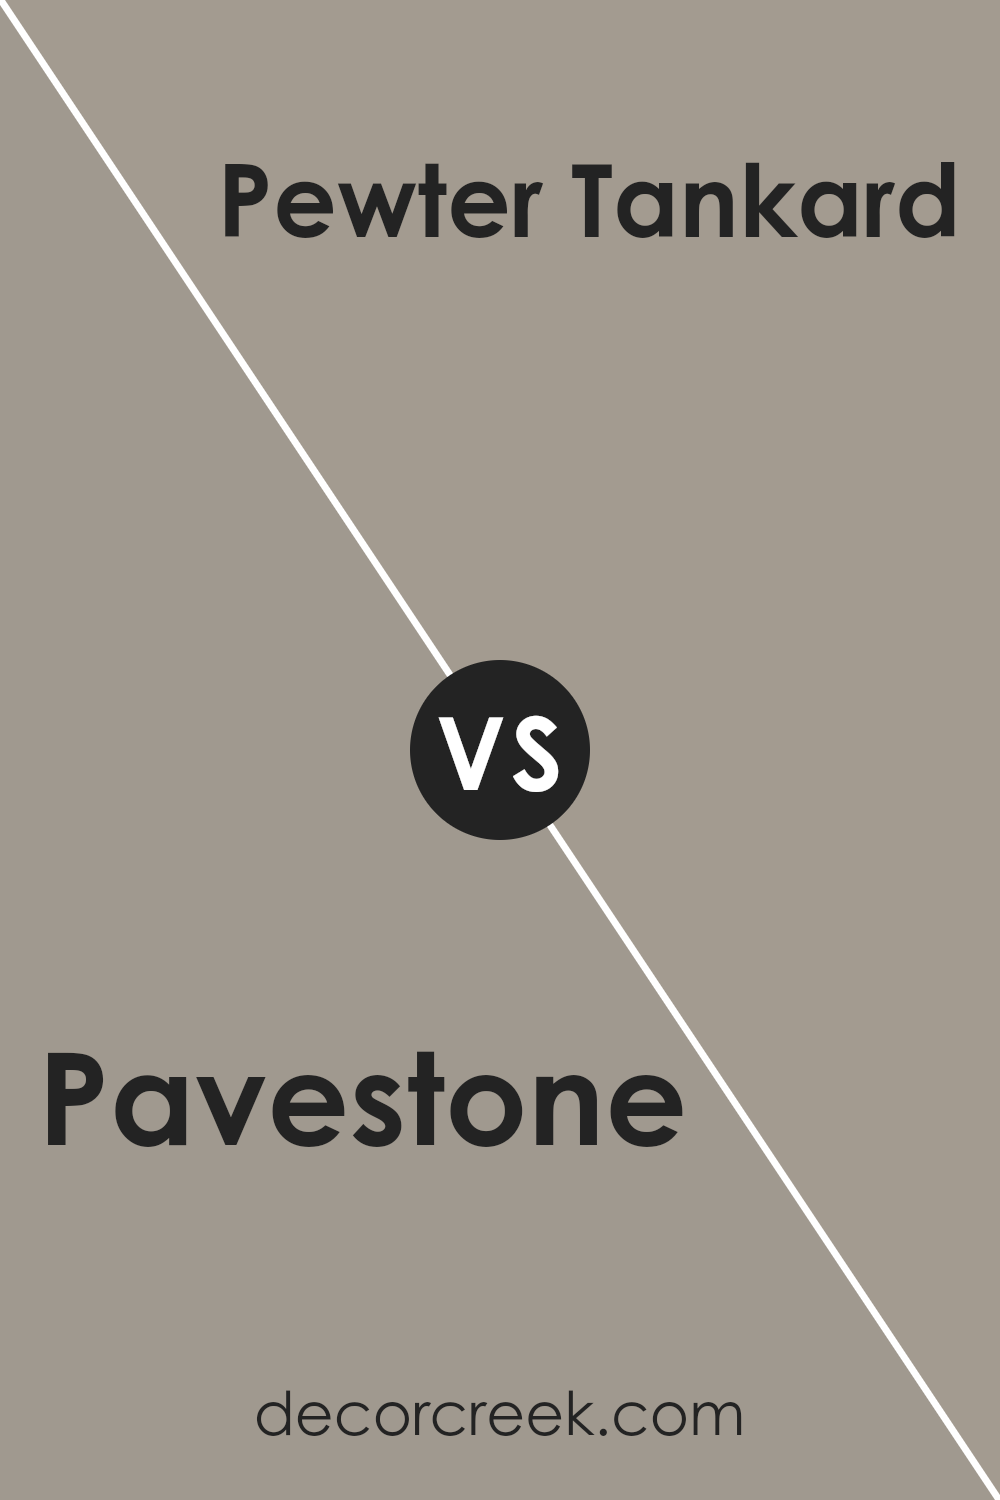 pavestone_sw_7642_vs_pewter_tankard_sw_0023